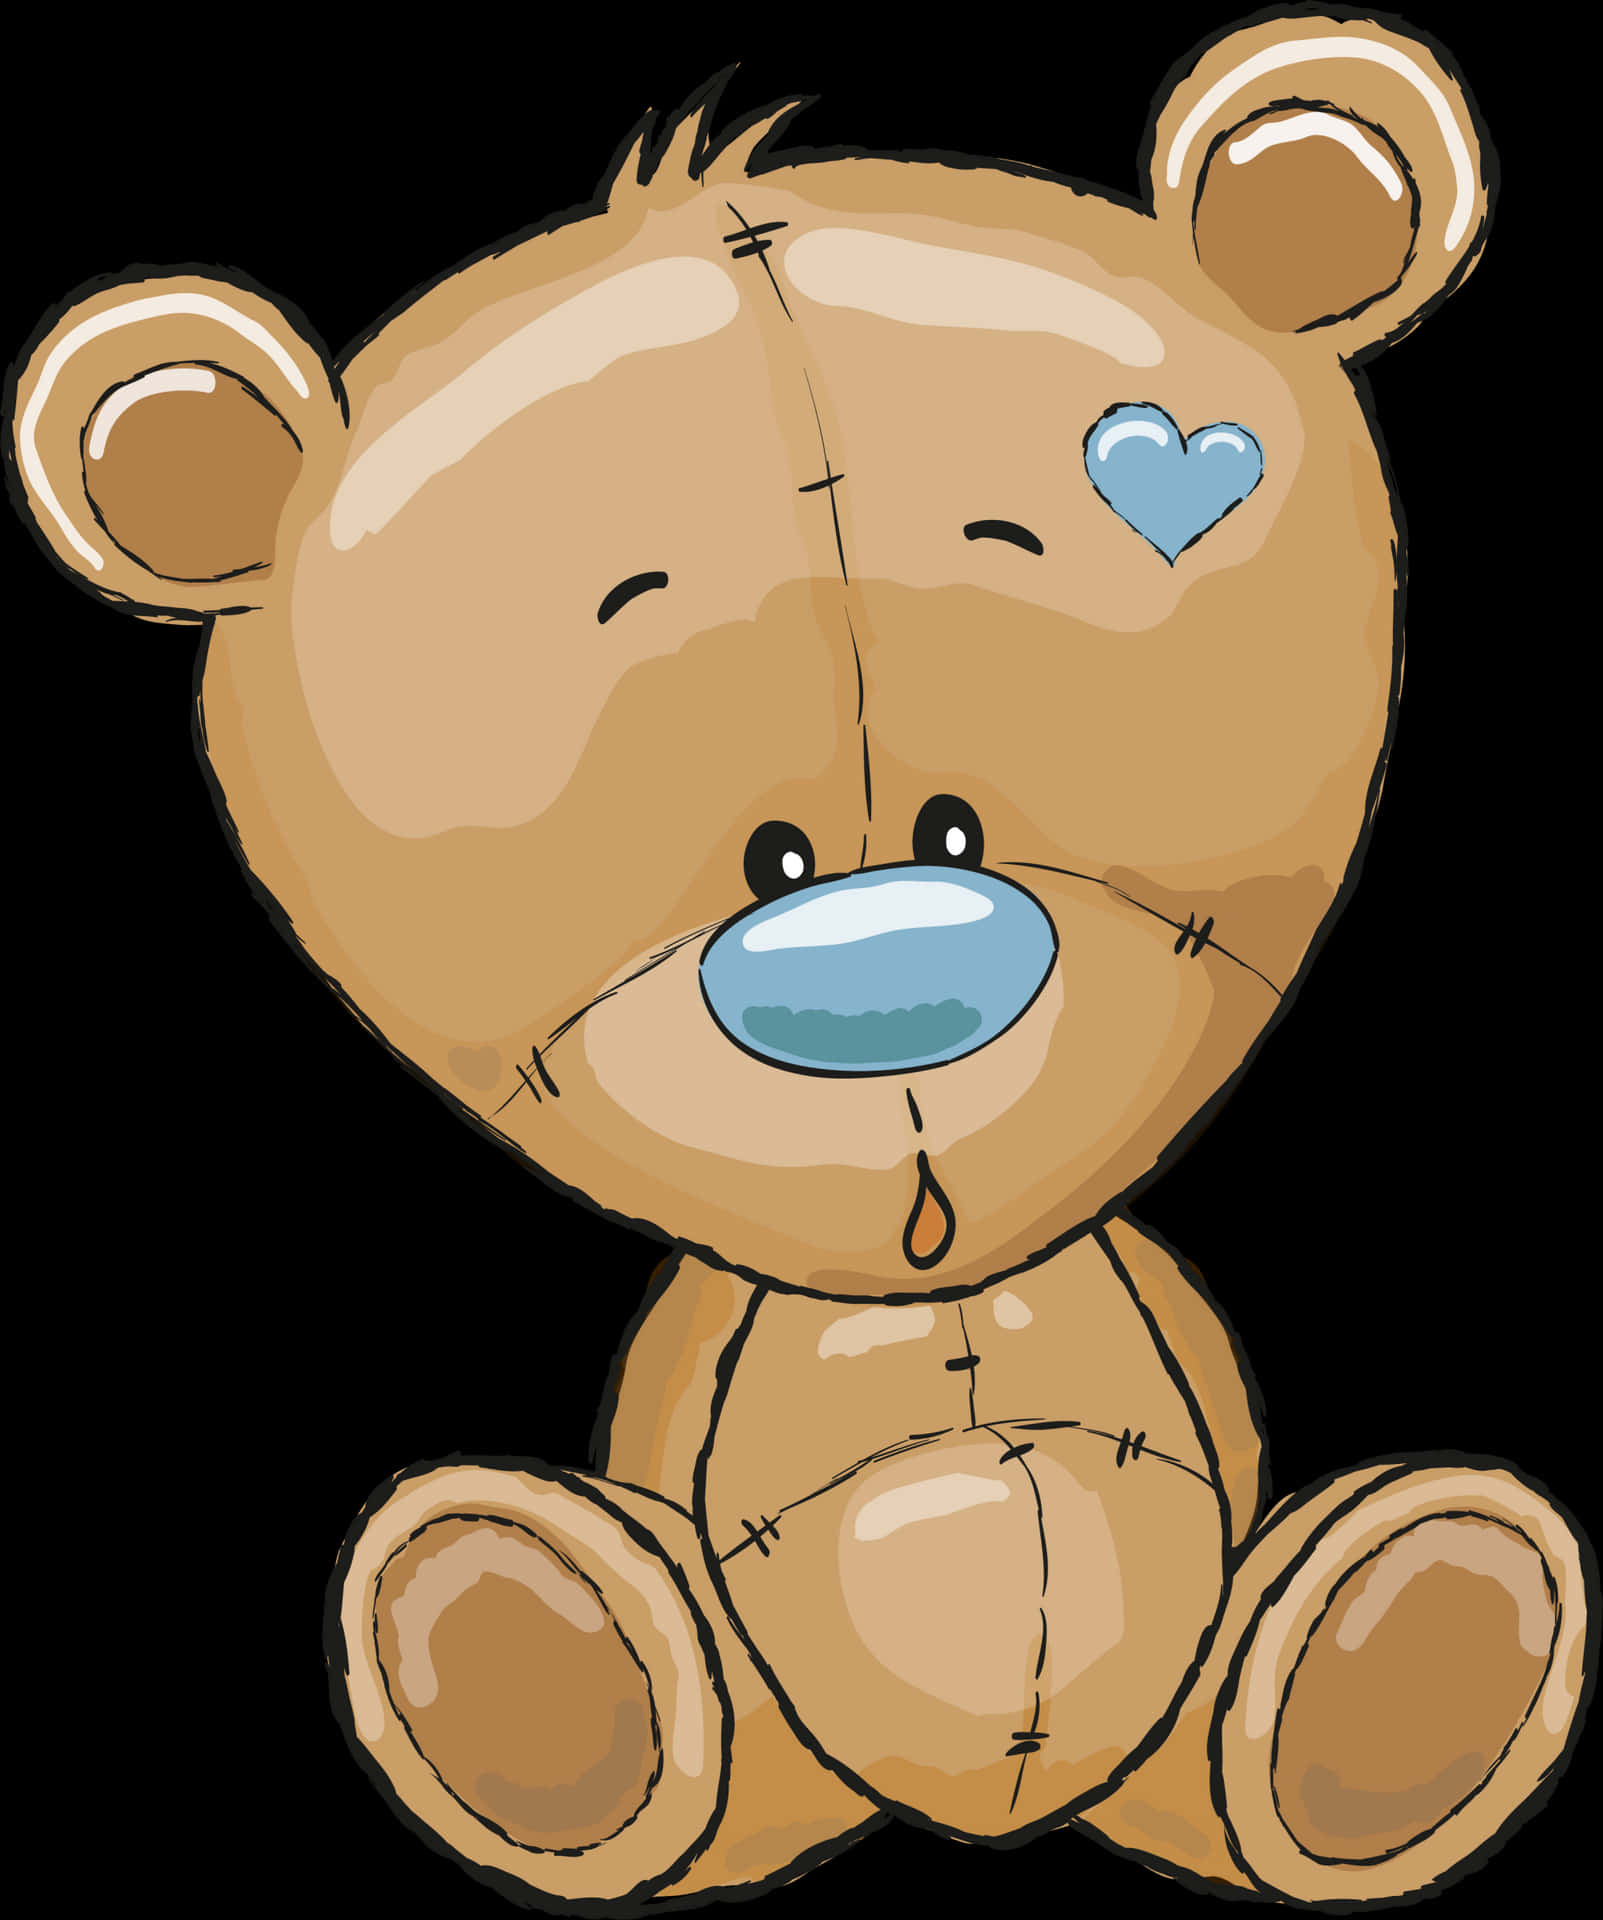 Cute Crying Teddy Bear Illustration PNG